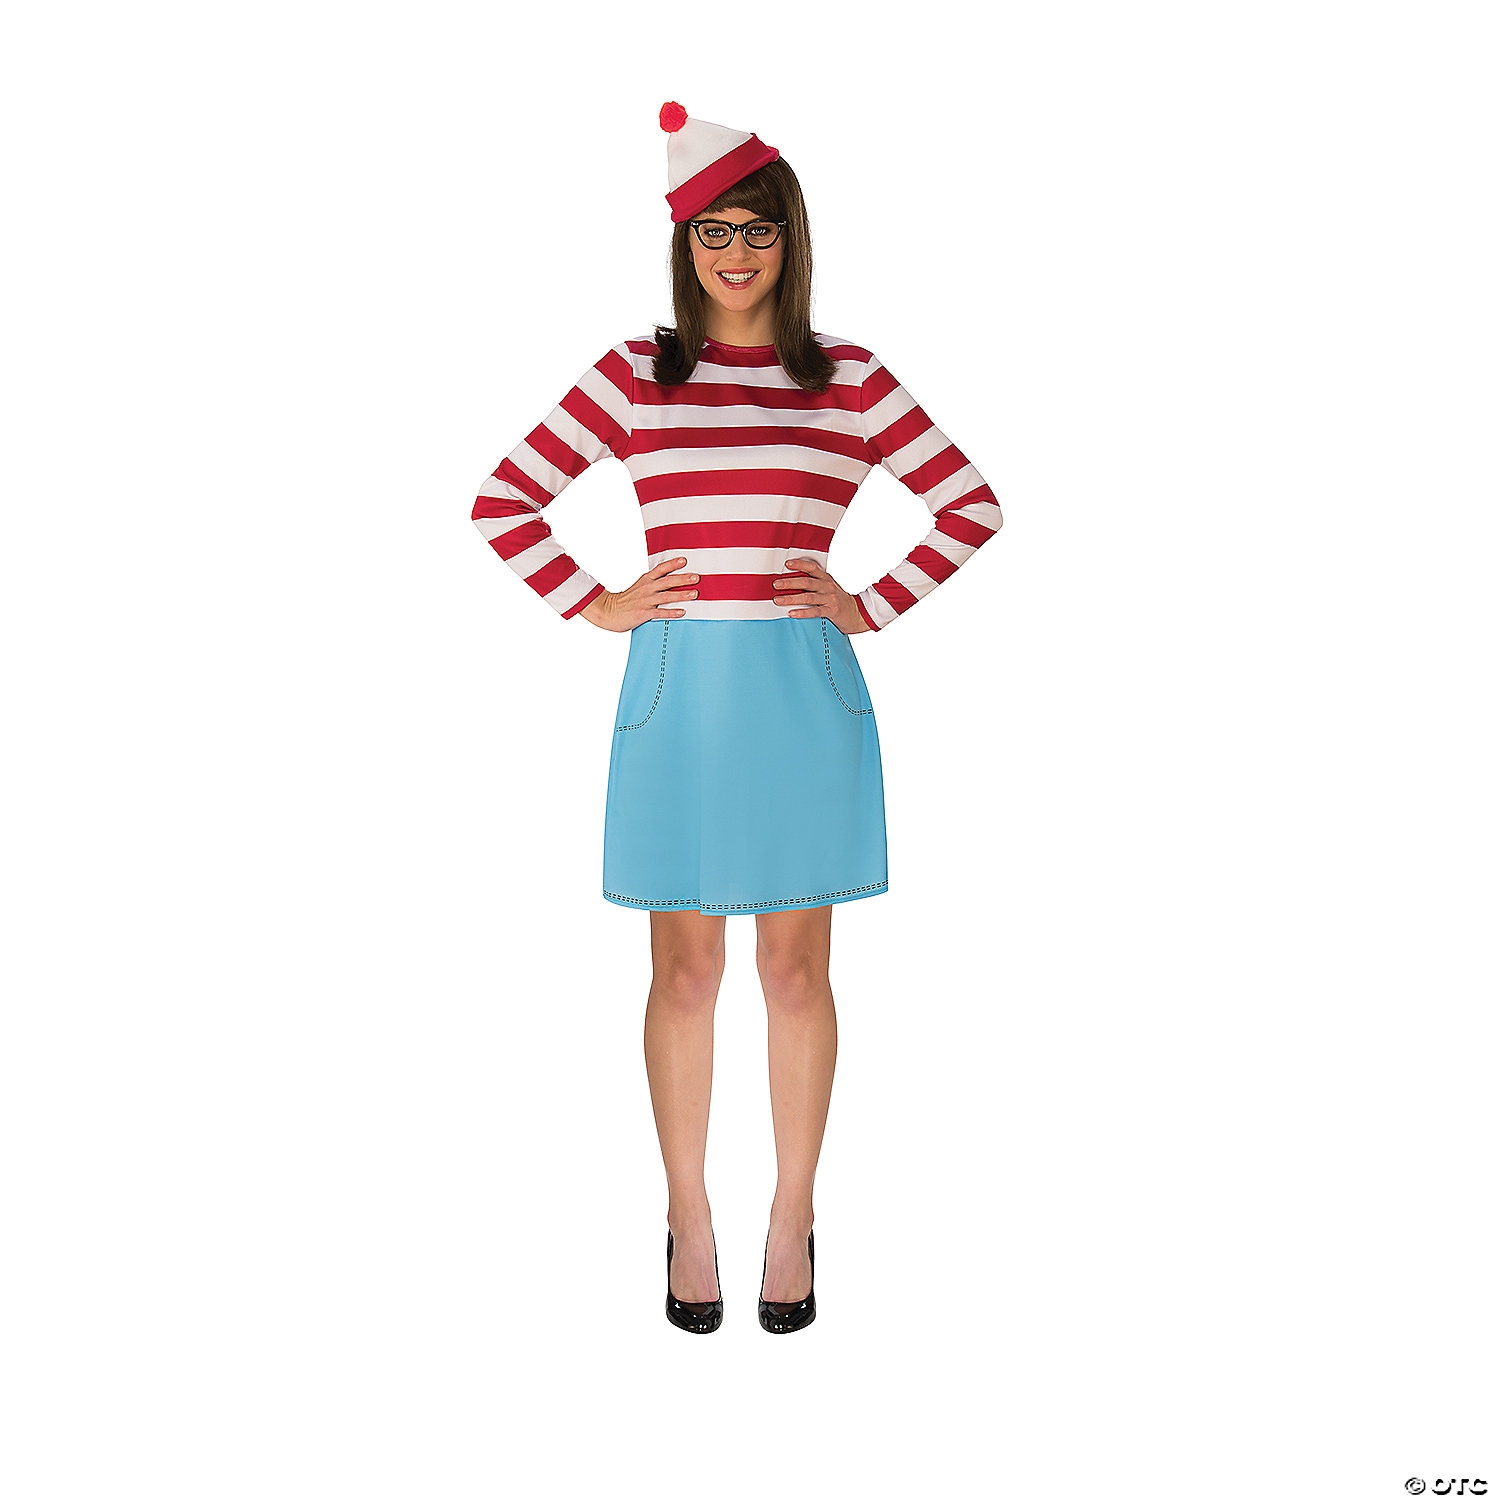 Where's Waldo Deluxe Adult Costume 